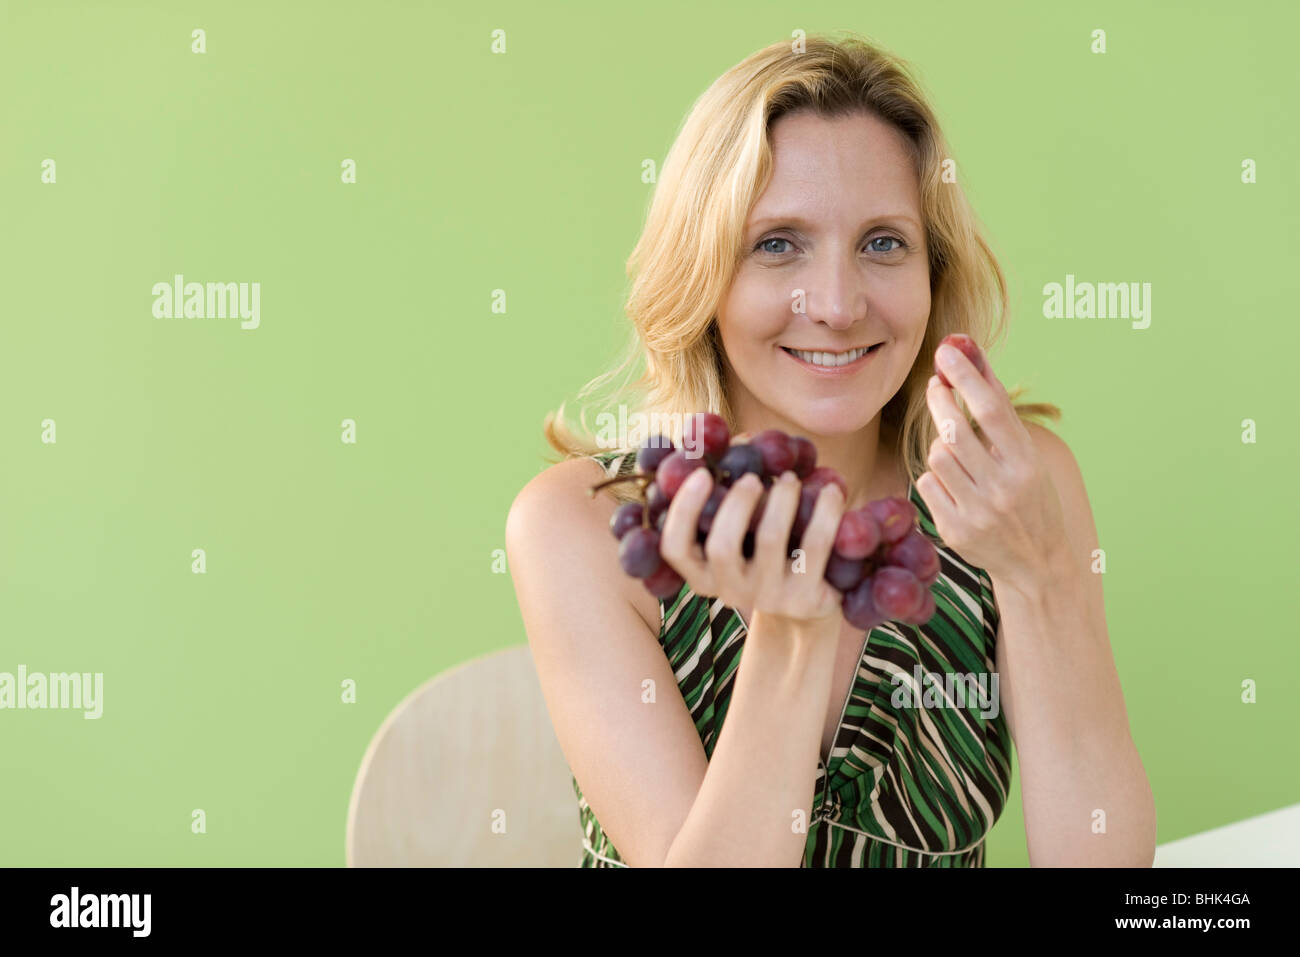 Mature woman eating grapes Stock Photo